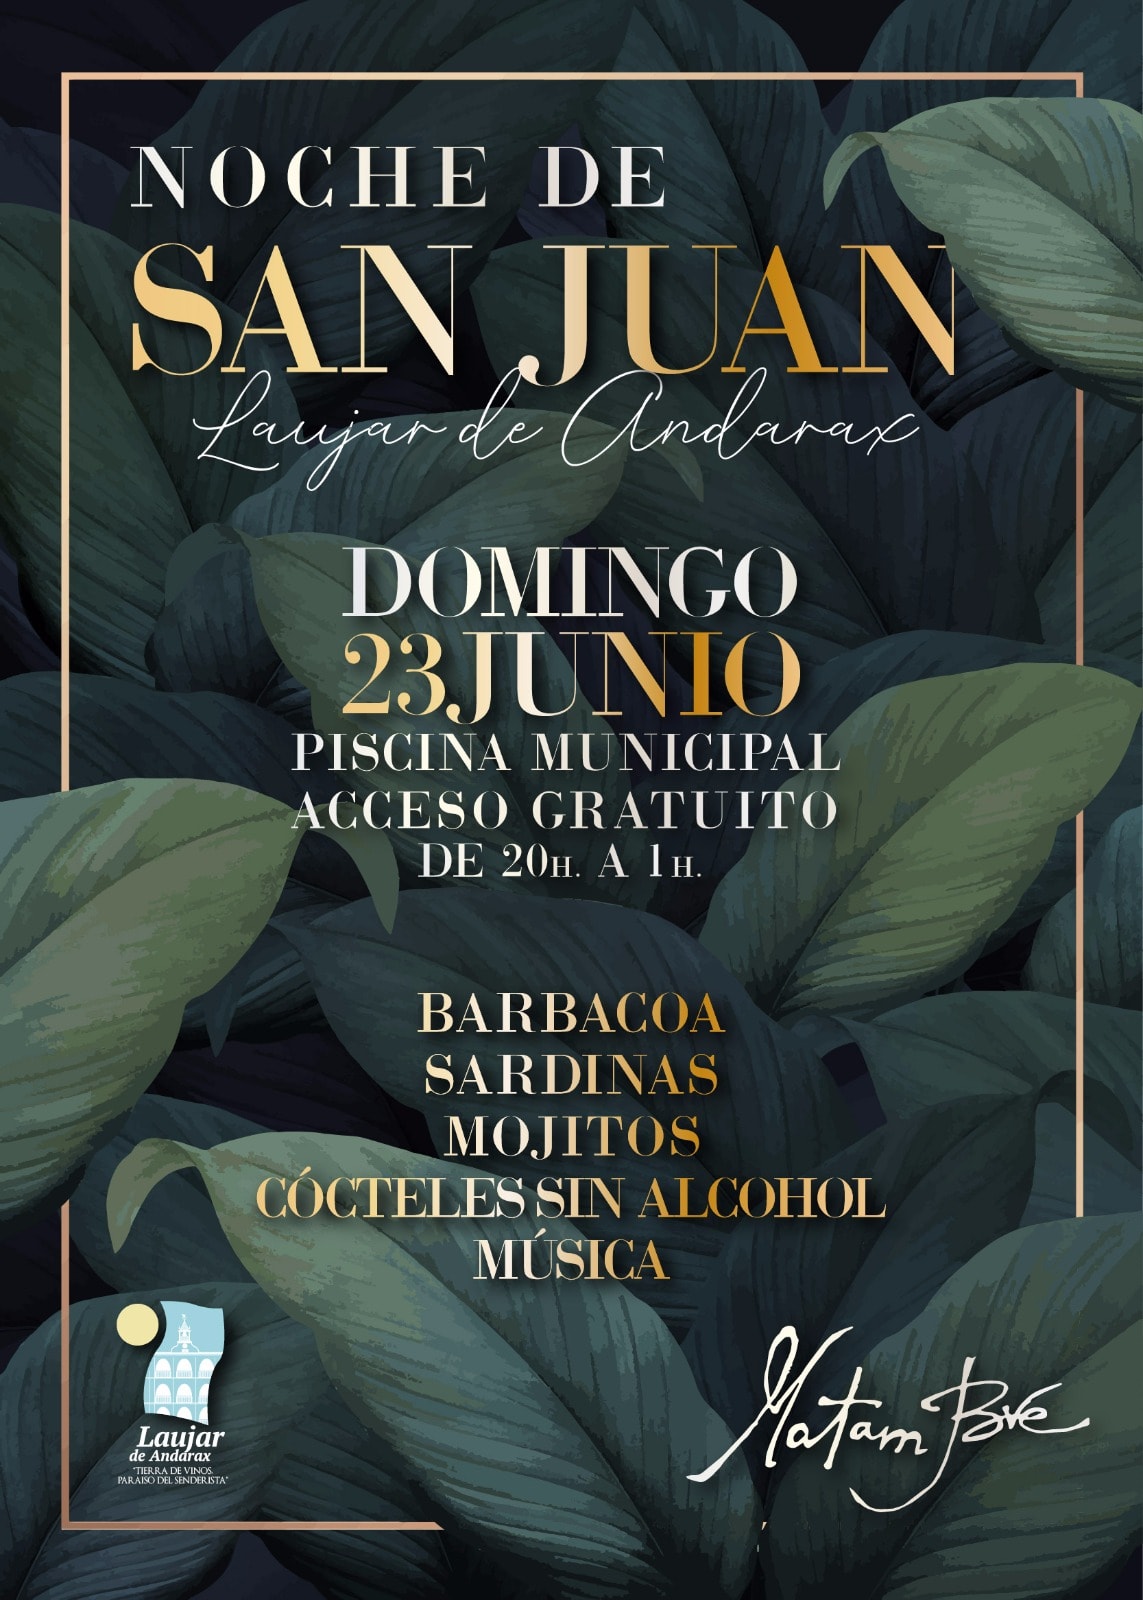 Cartel de la Fiesta de la Noche de San Juan 2019 en Laujar de Andarax